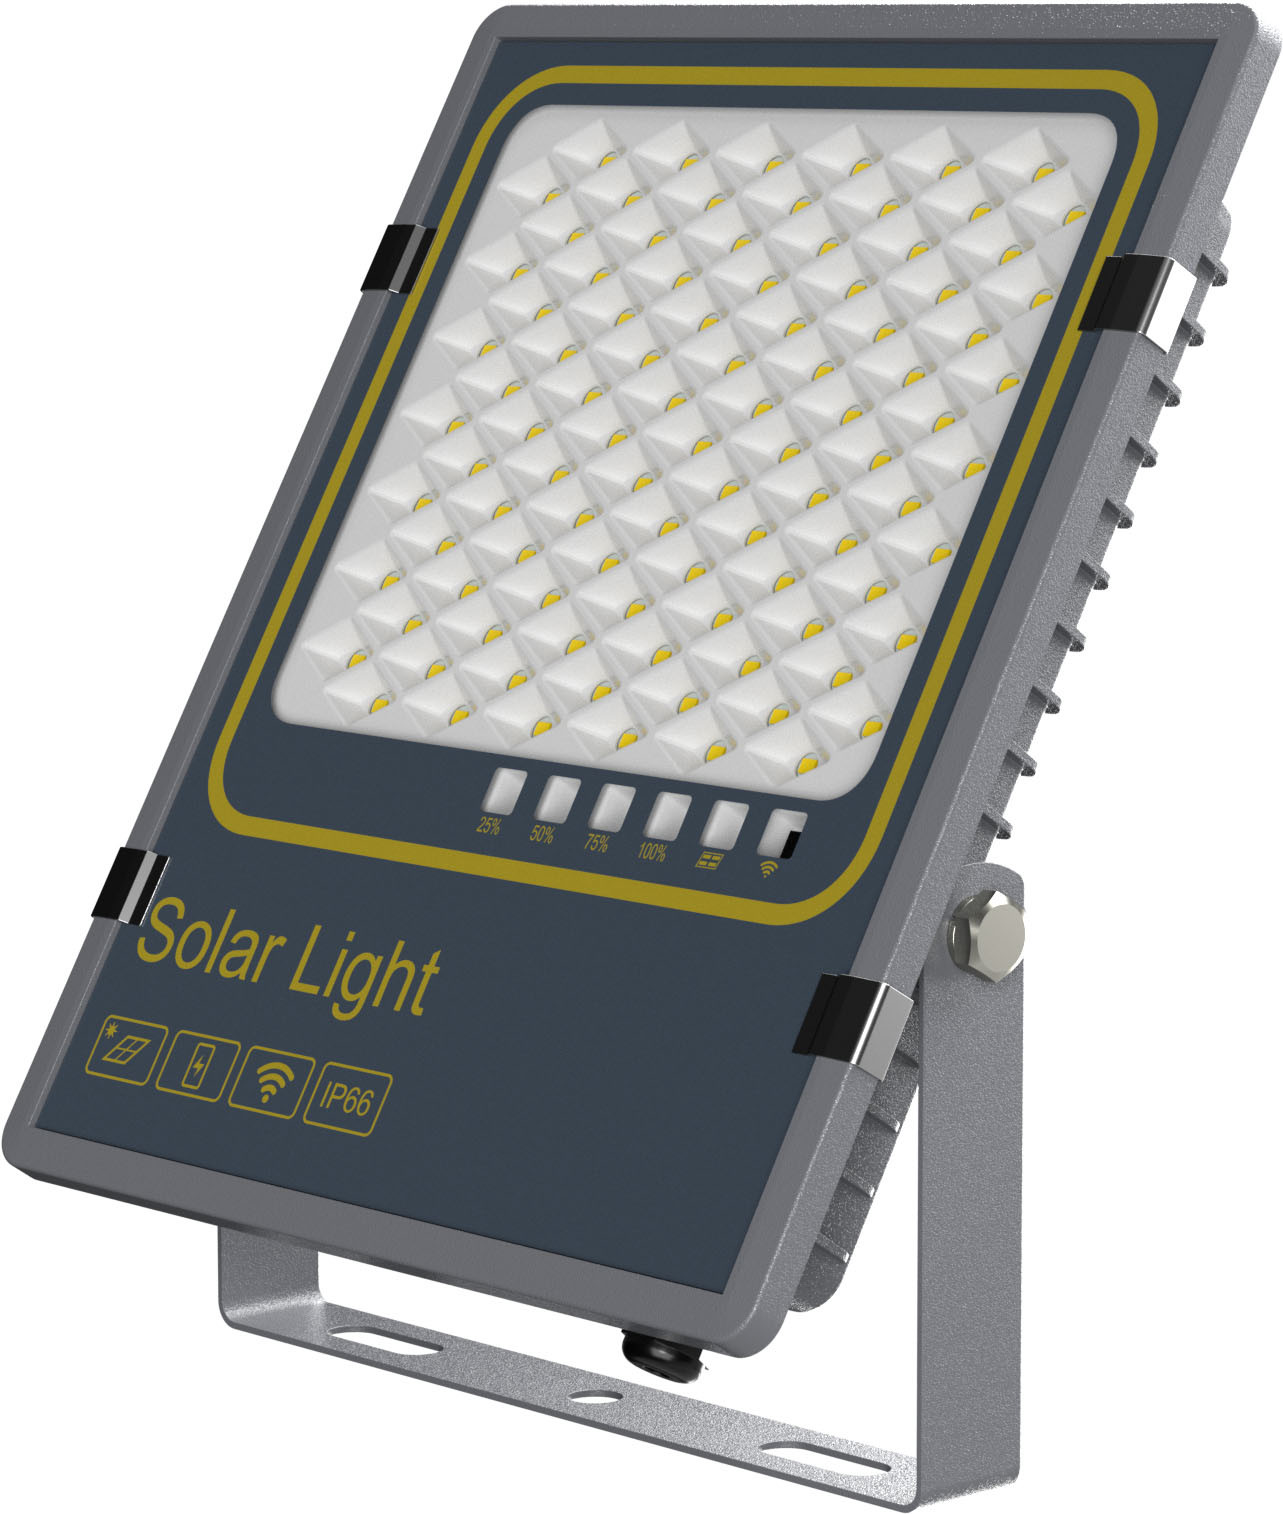 Solar LED Light, Solar Street Light, Solar Flood Light, Battery Capacity Indicator, 50W, 100W, 200W, 300W, Outdoor Light